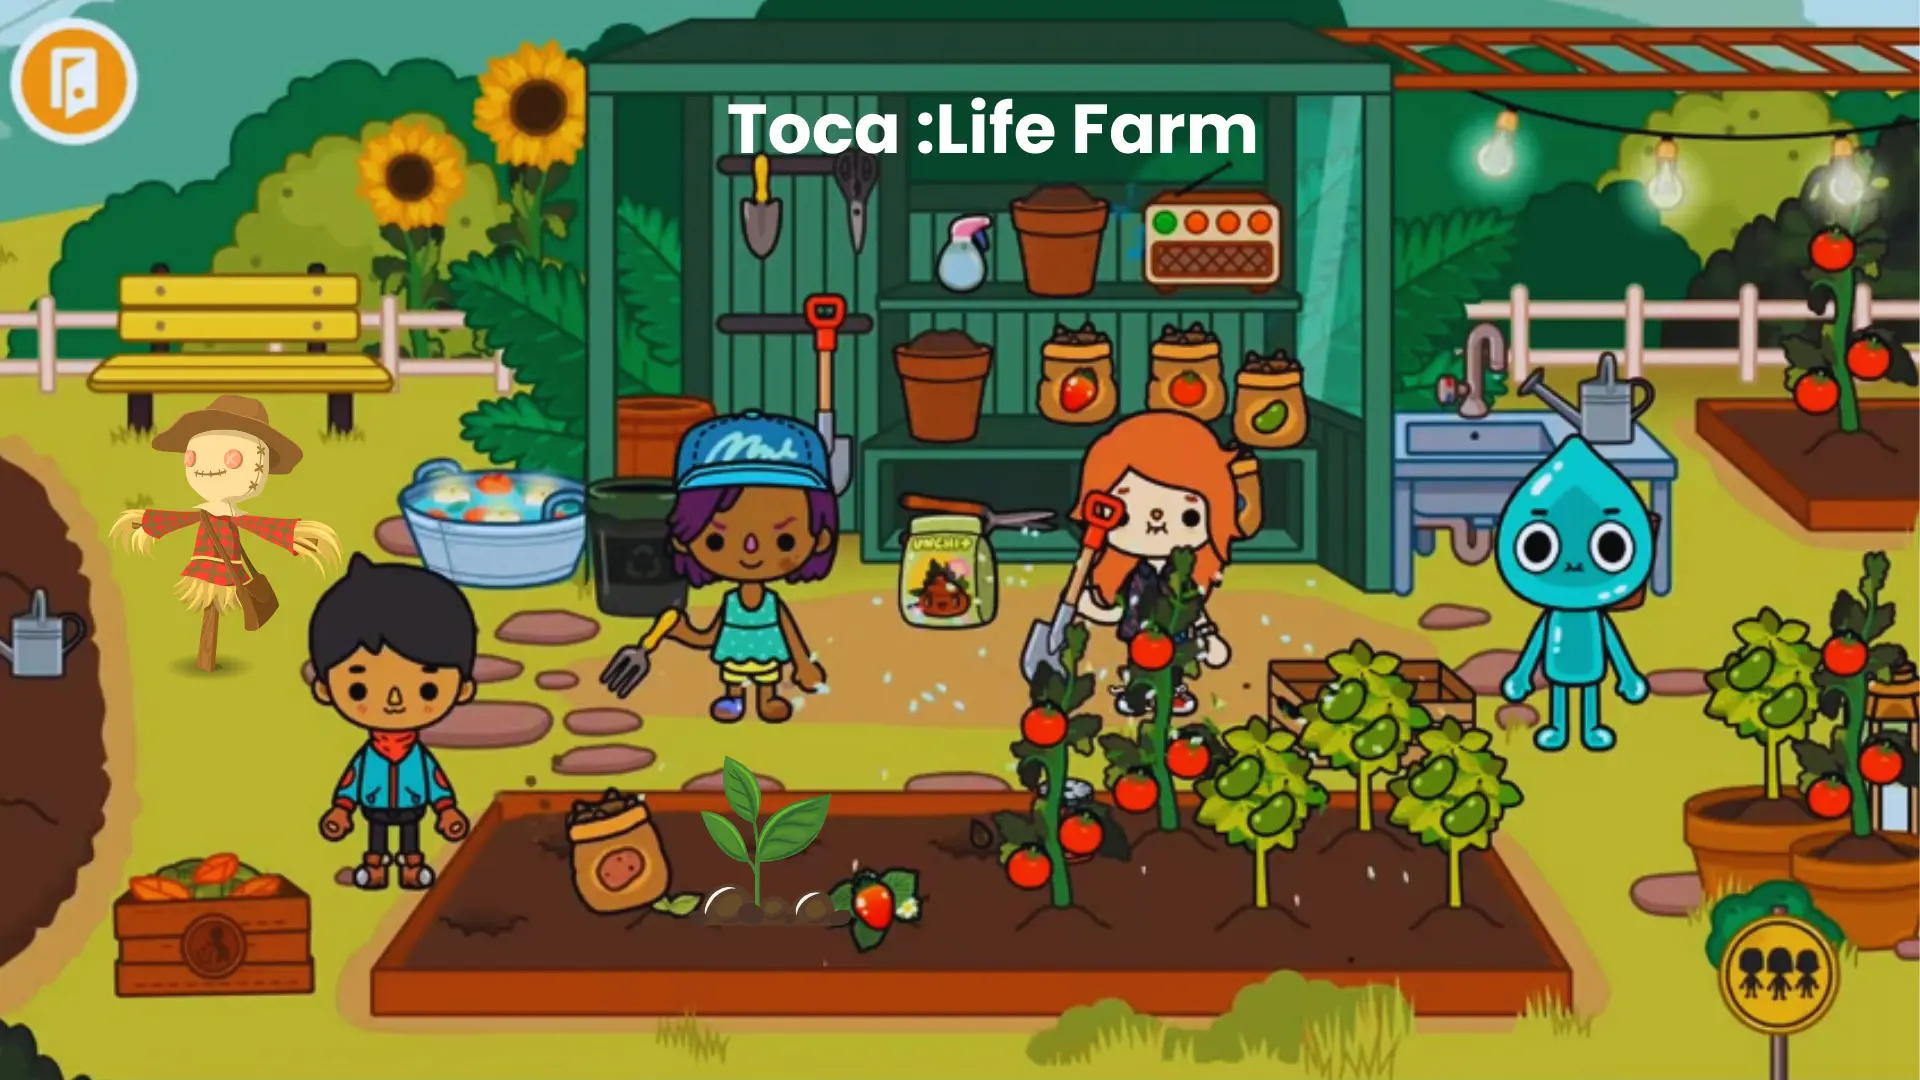 Experience life on the farm in Toca Life Farm.